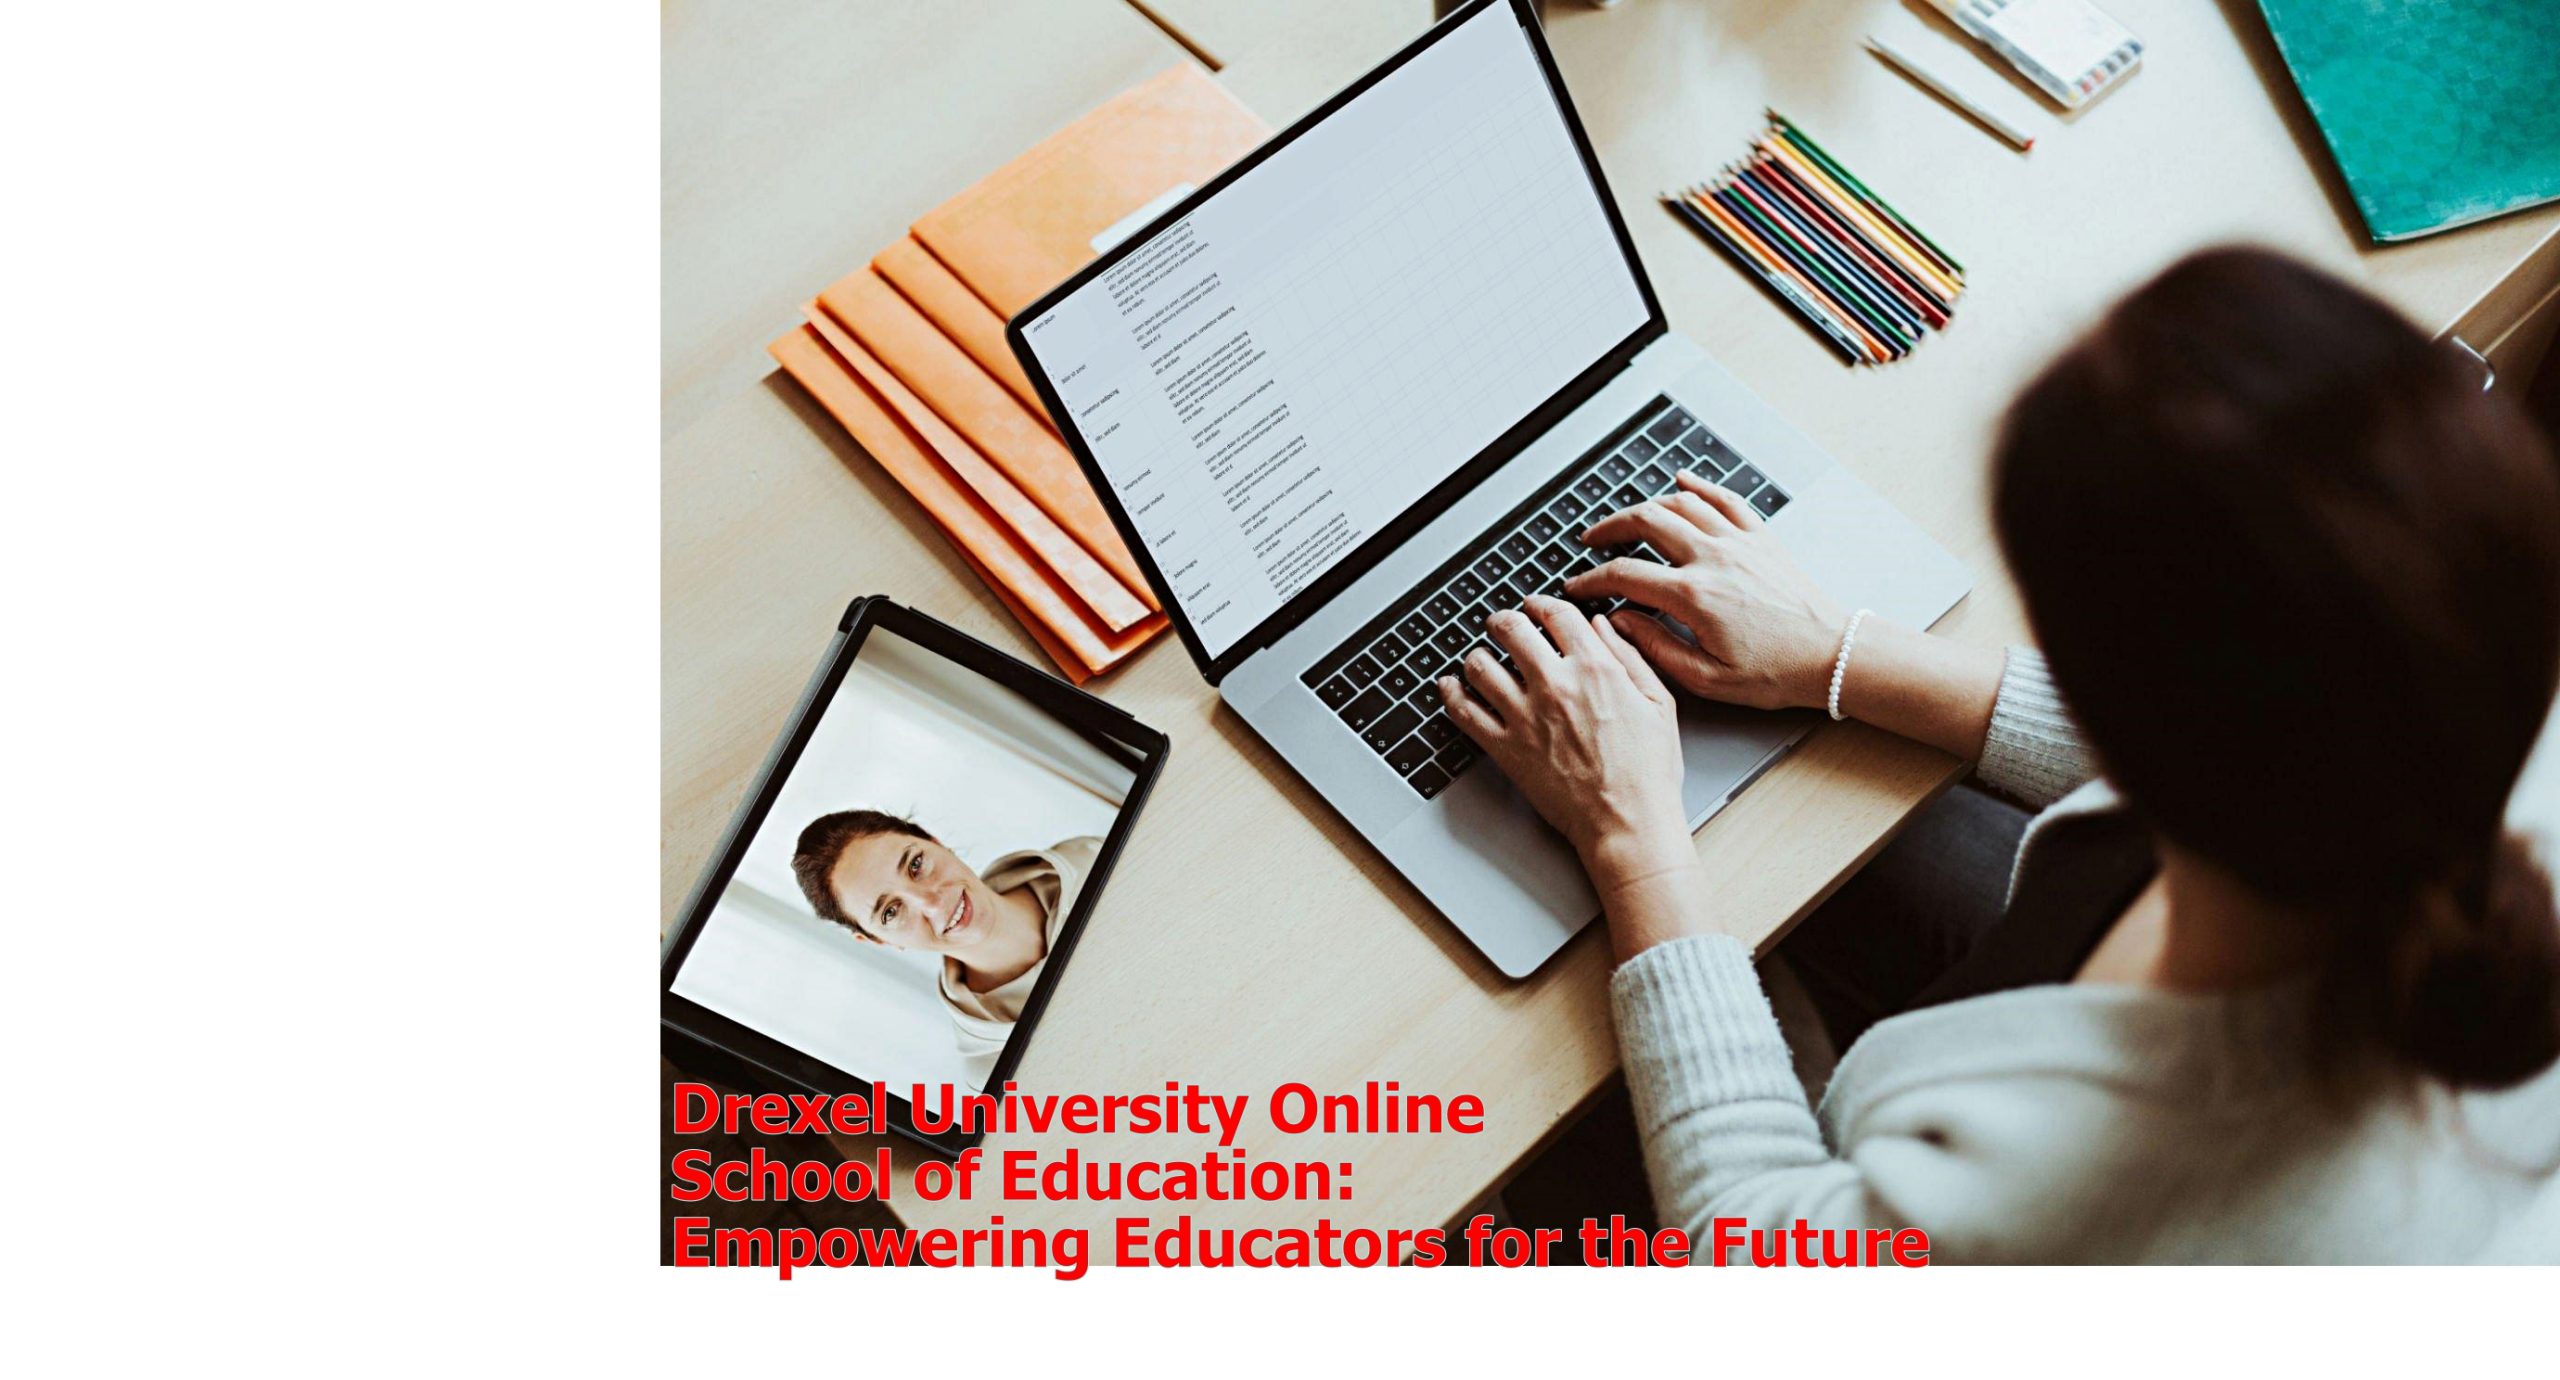 Drexel University Online School of Education: Empowering Educators for the Future